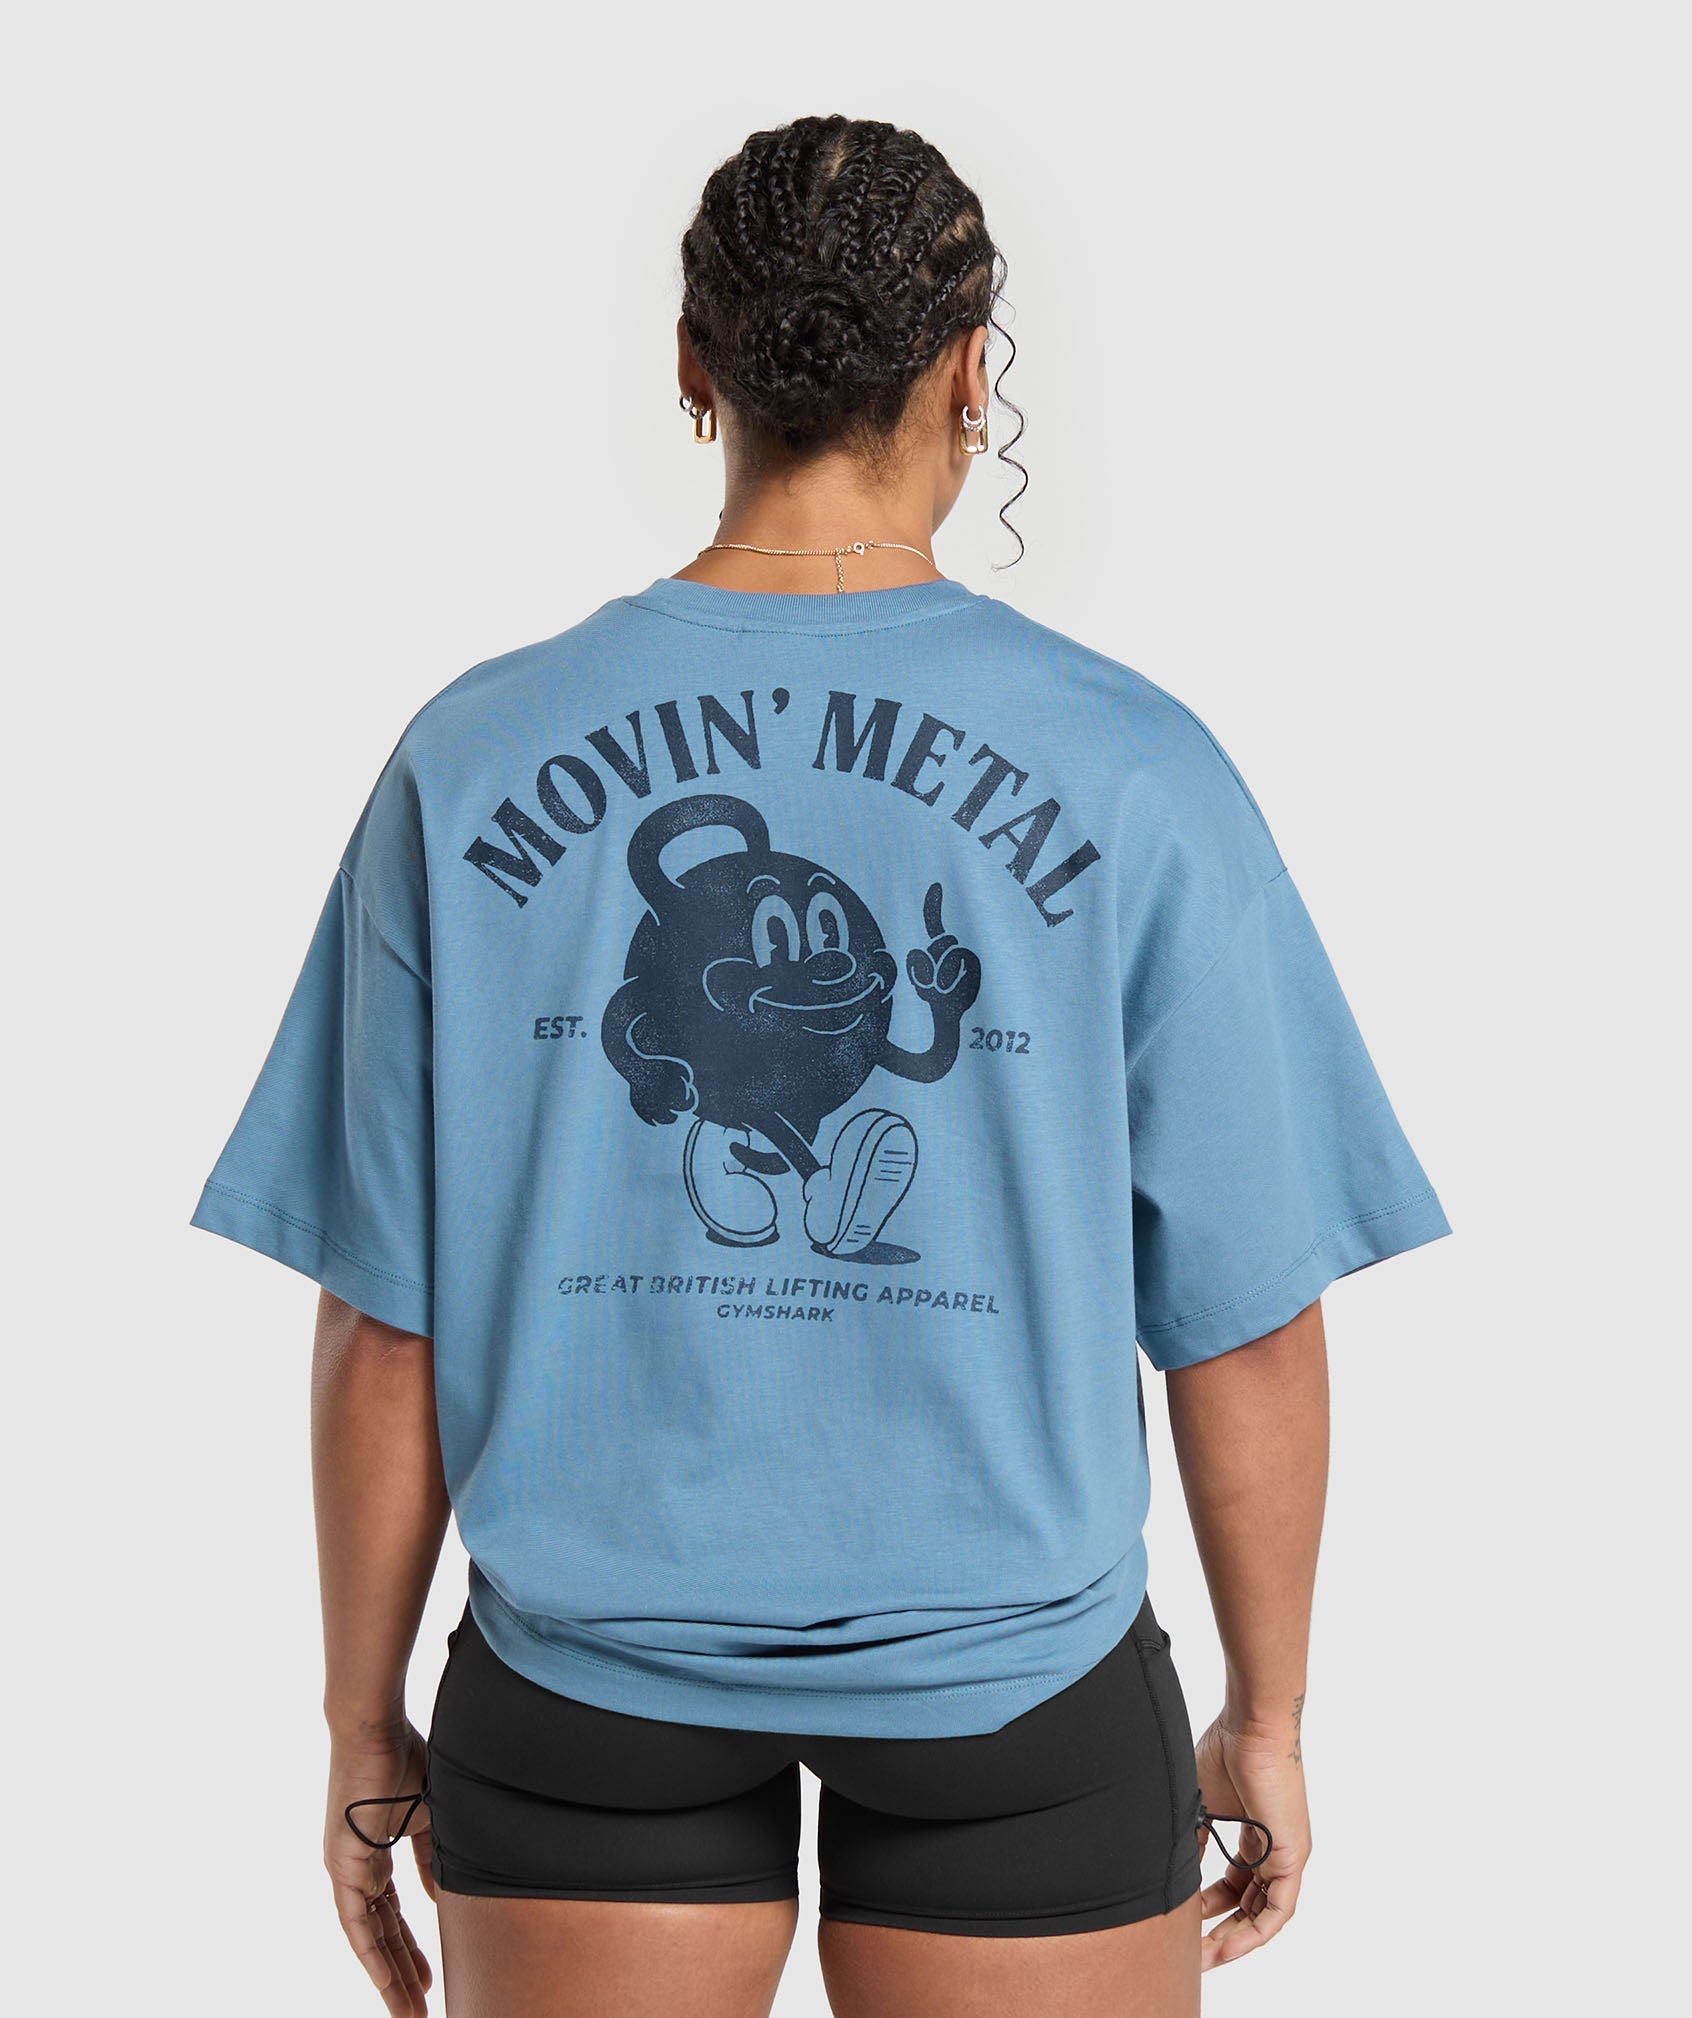 Movin' Metal T-Shirt